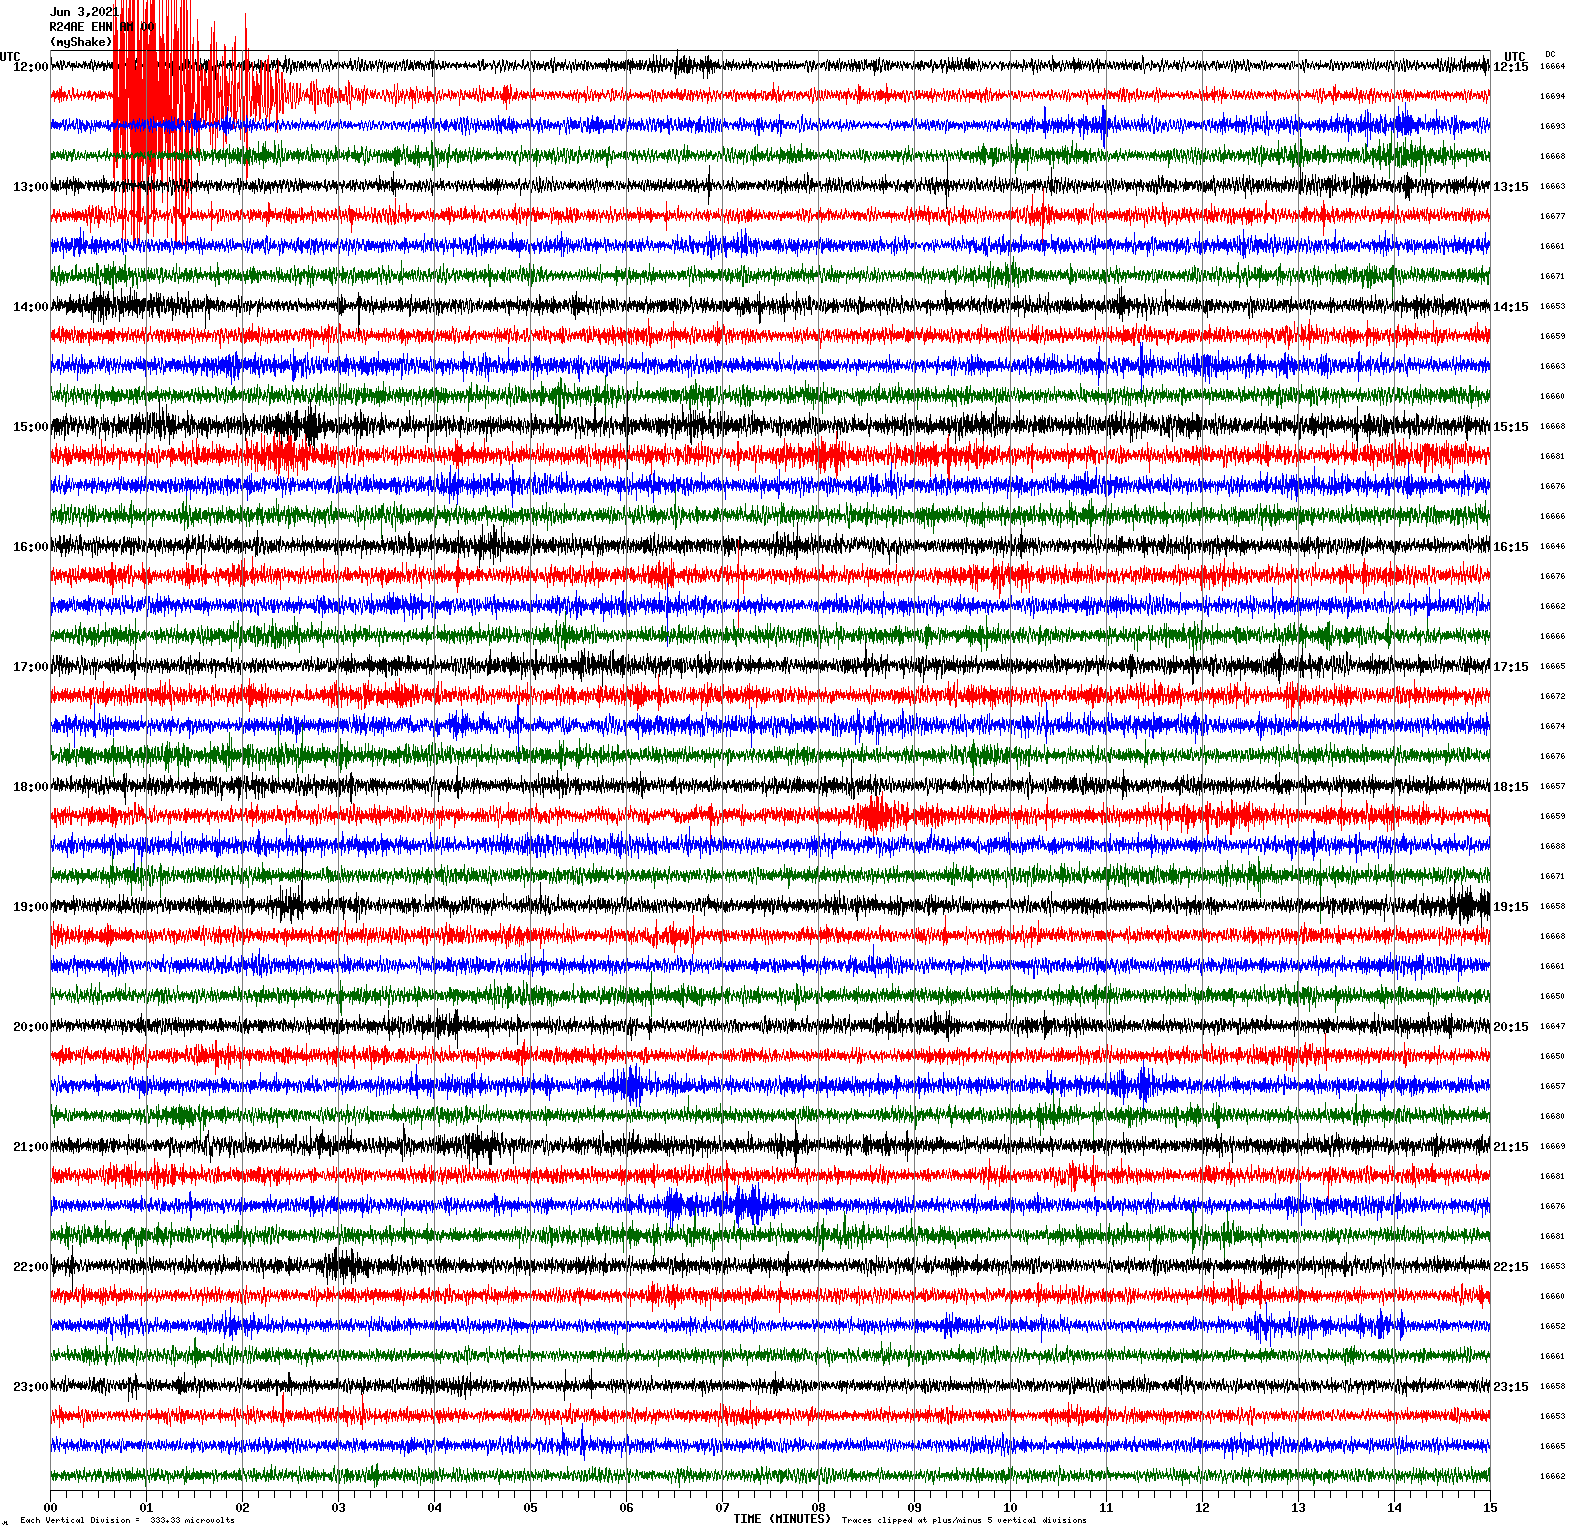 /seismic-data/R24AE/R24AE_EHN_AM_00.2021060312.gif